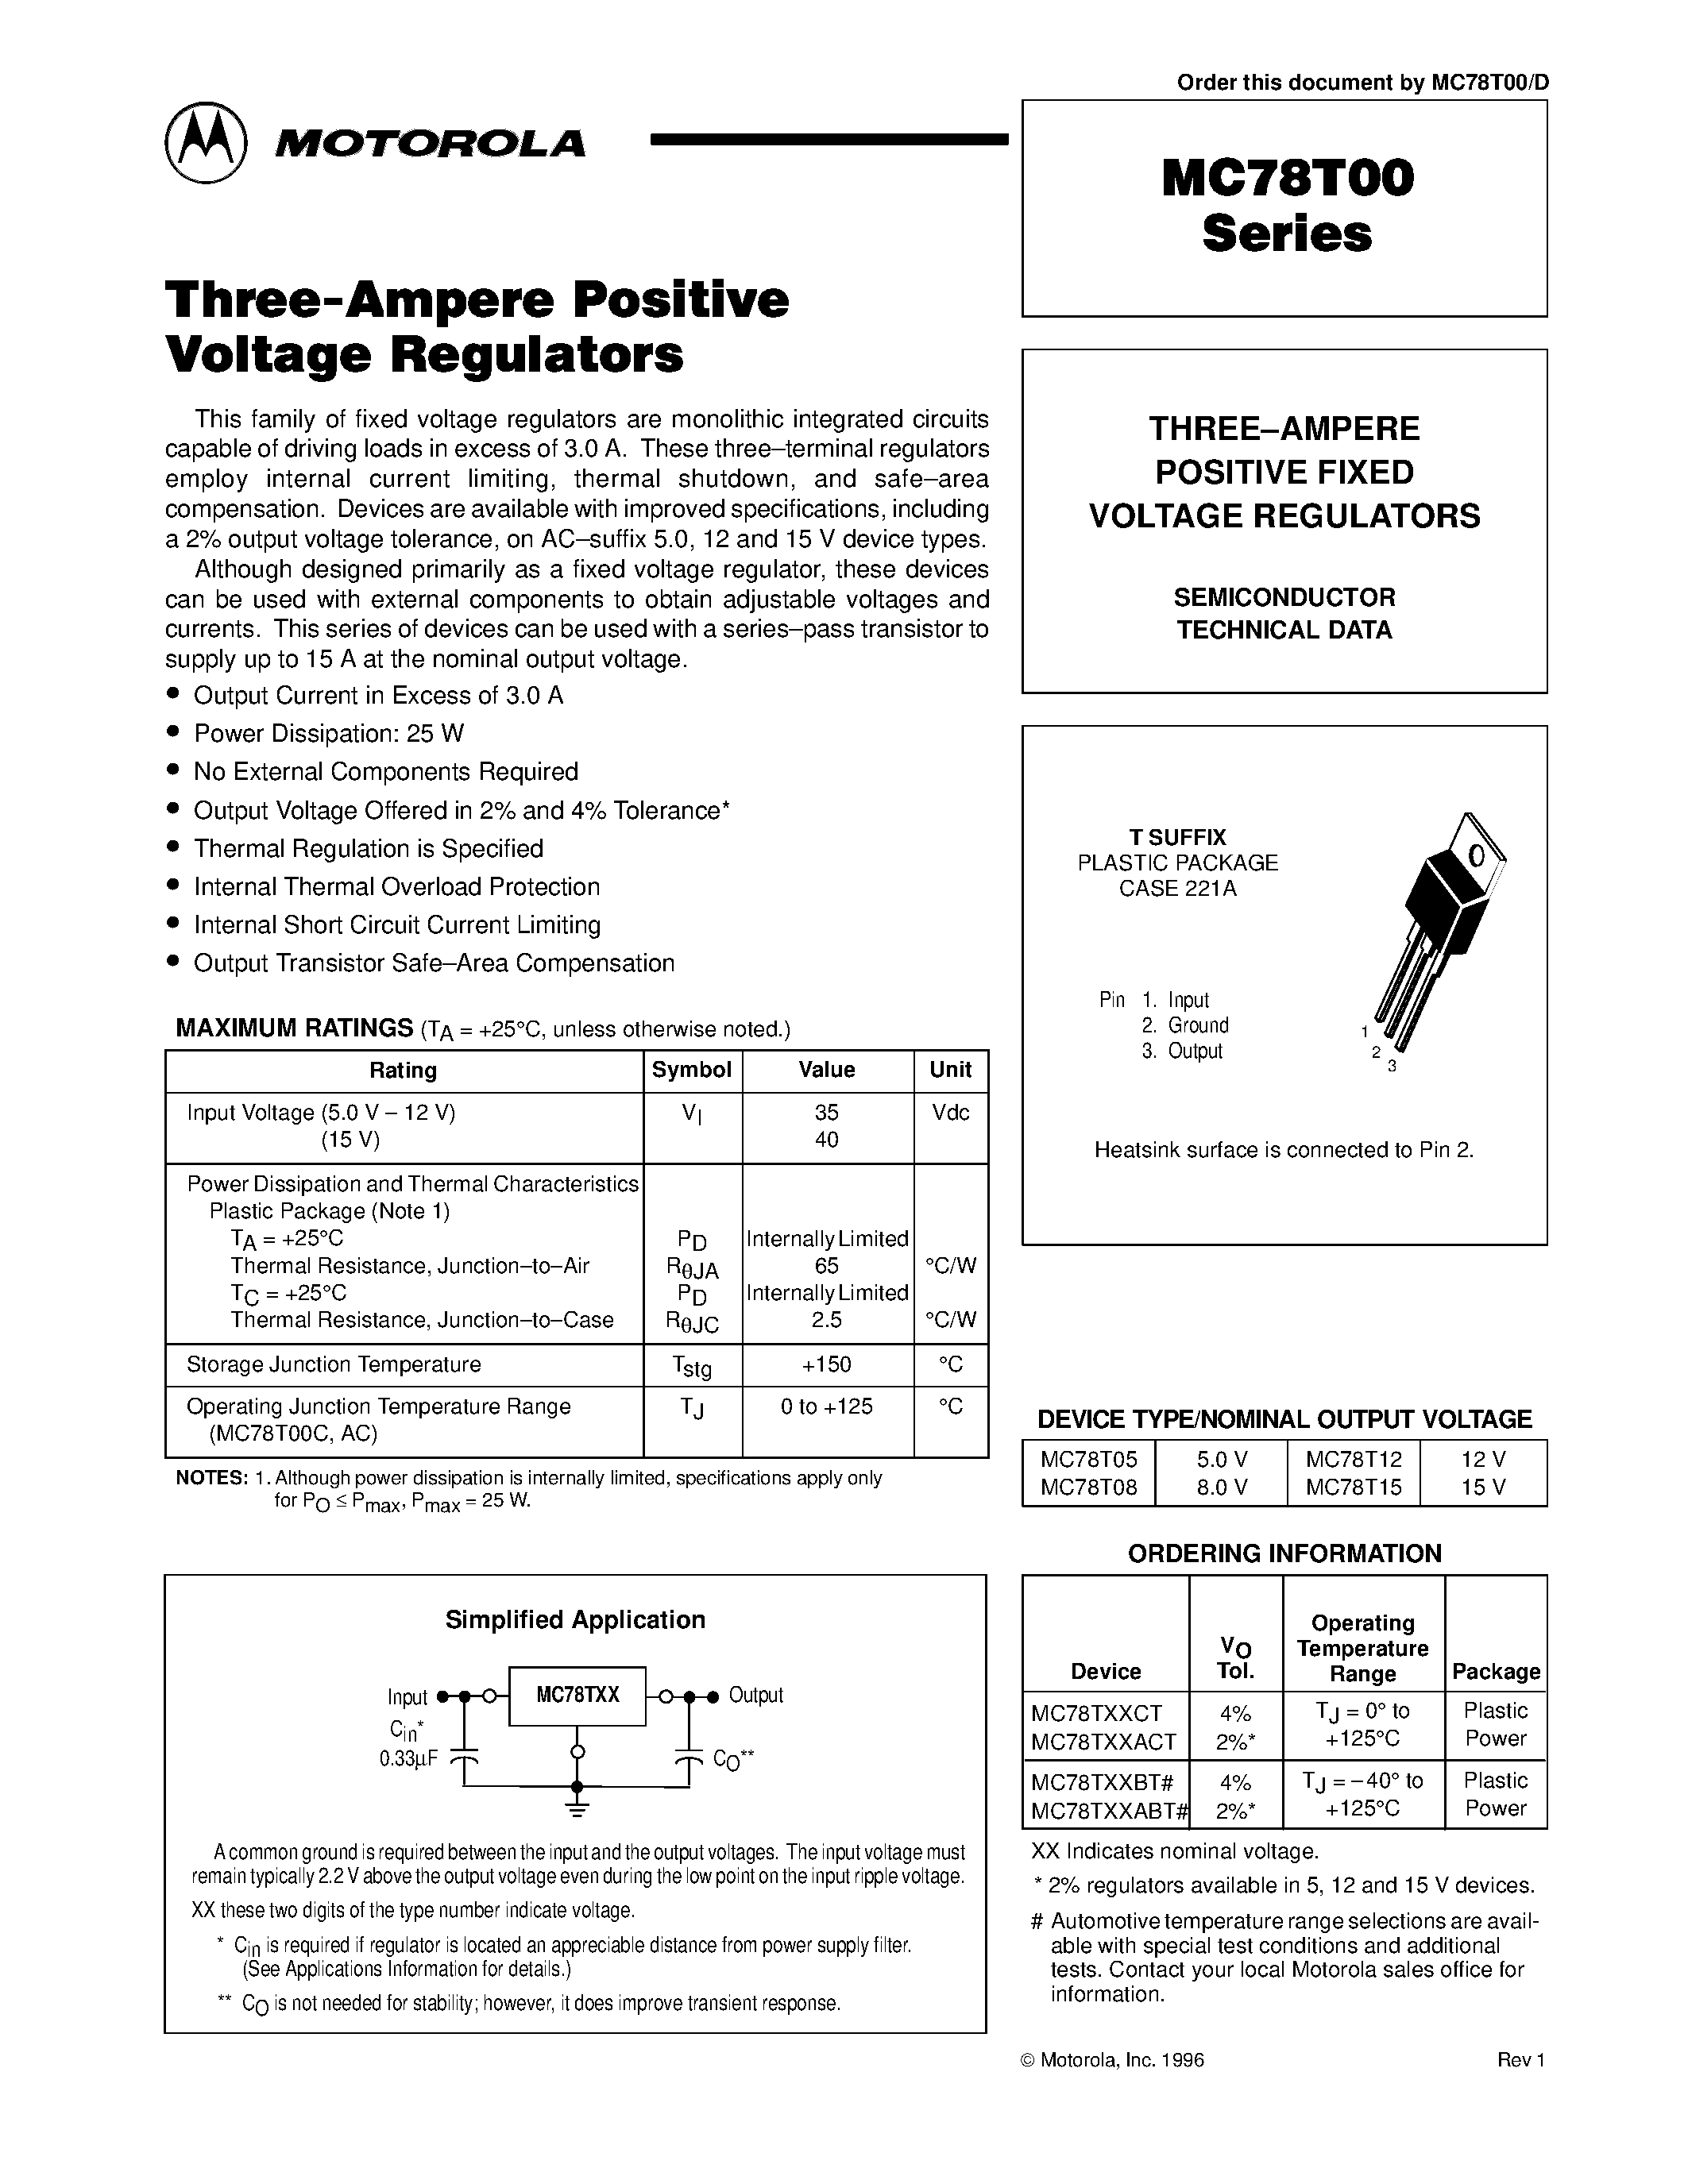 Даташит MC78T00 - THREE-AMPERE POSITIVE FIXED VOLTAGE REGULATORS страница 1